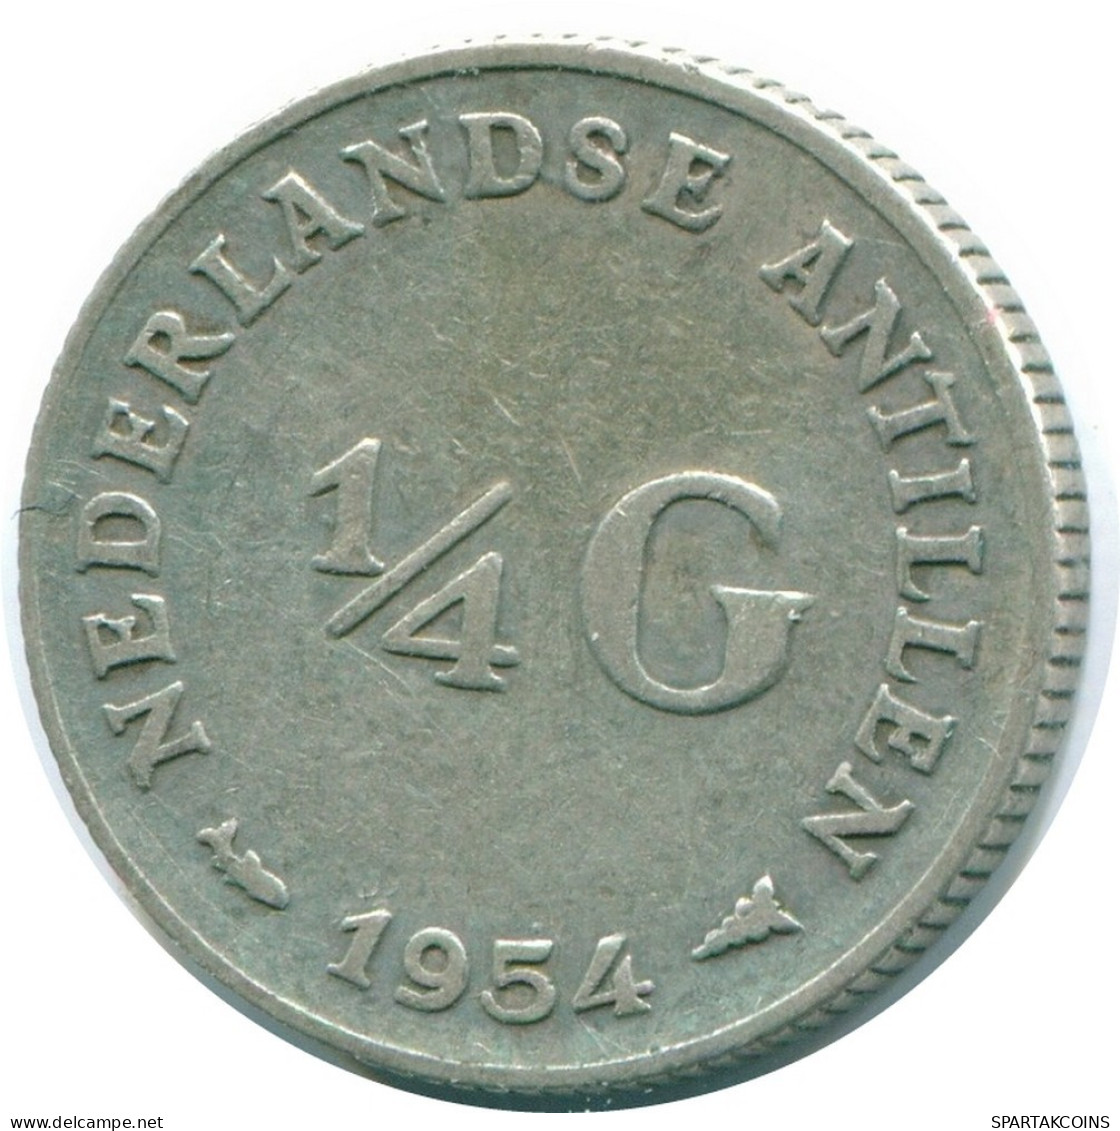 1/4 GULDEN 1954 NETHERLANDS ANTILLES SILVER Colonial Coin #NL10864.4.U.A - Niederländische Antillen